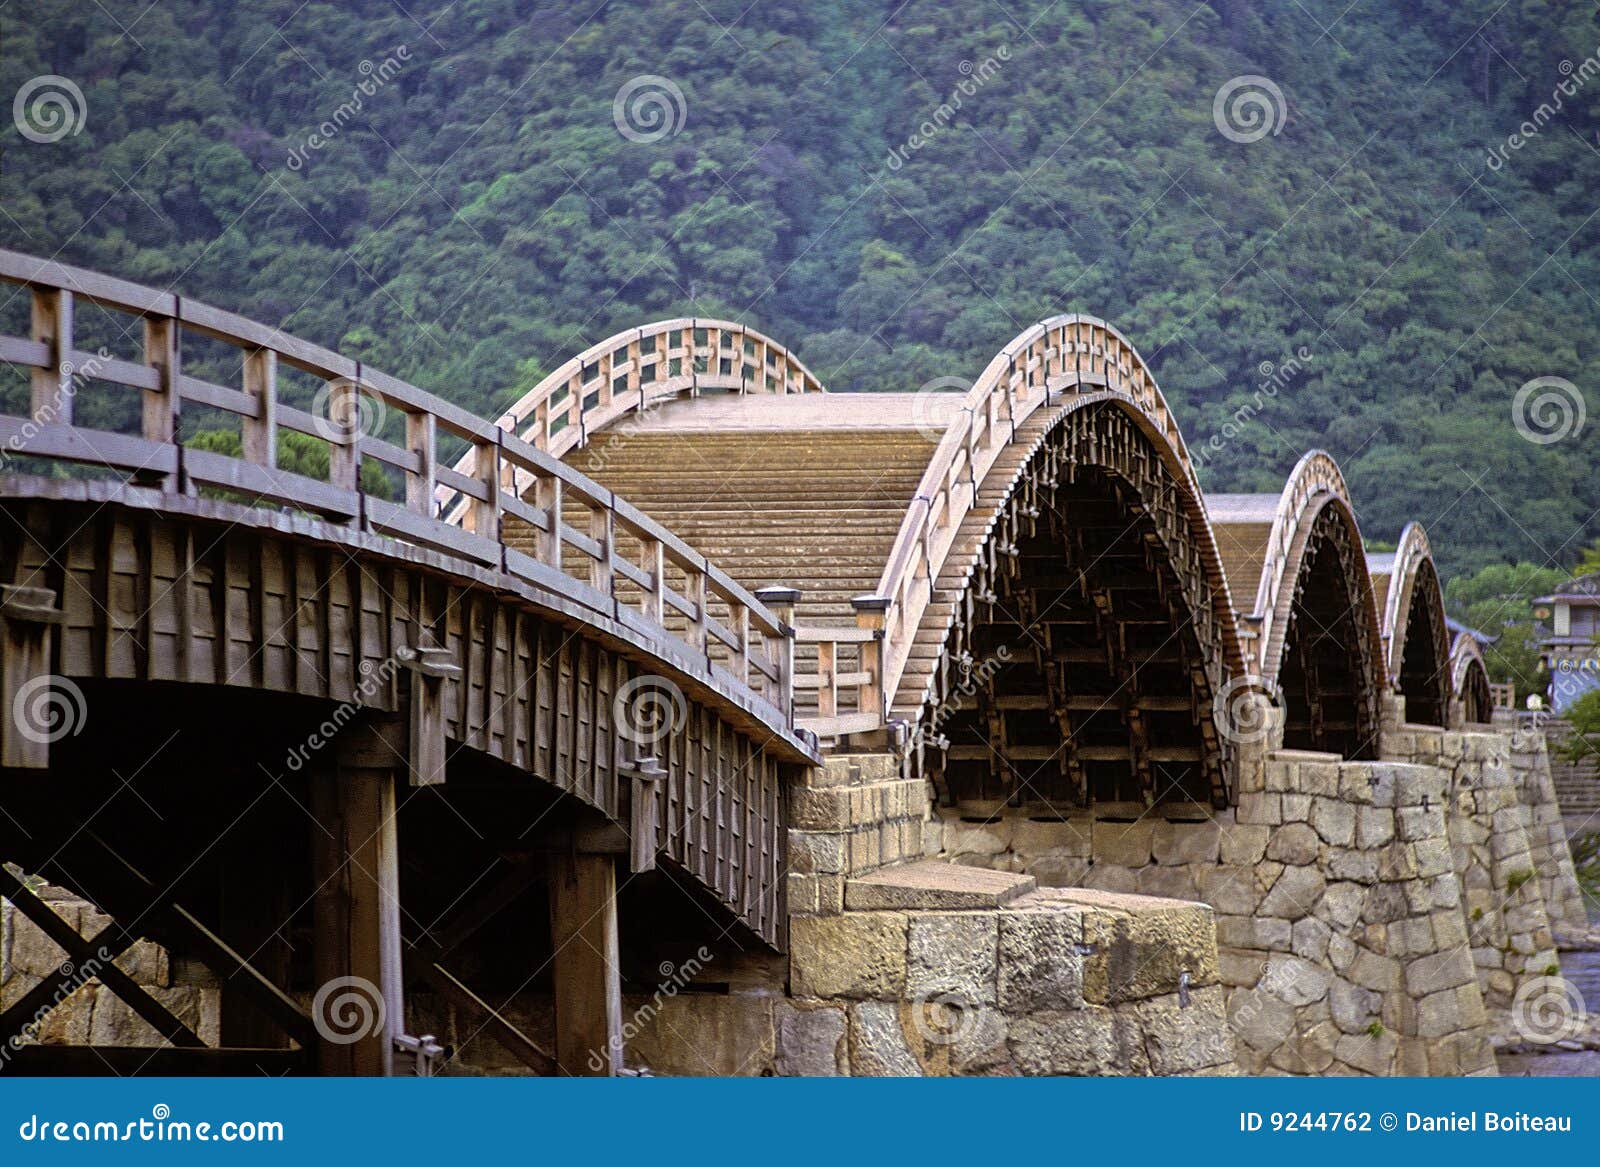 Famous old Kintai bridge showing unique wooden arches on stone pillars 